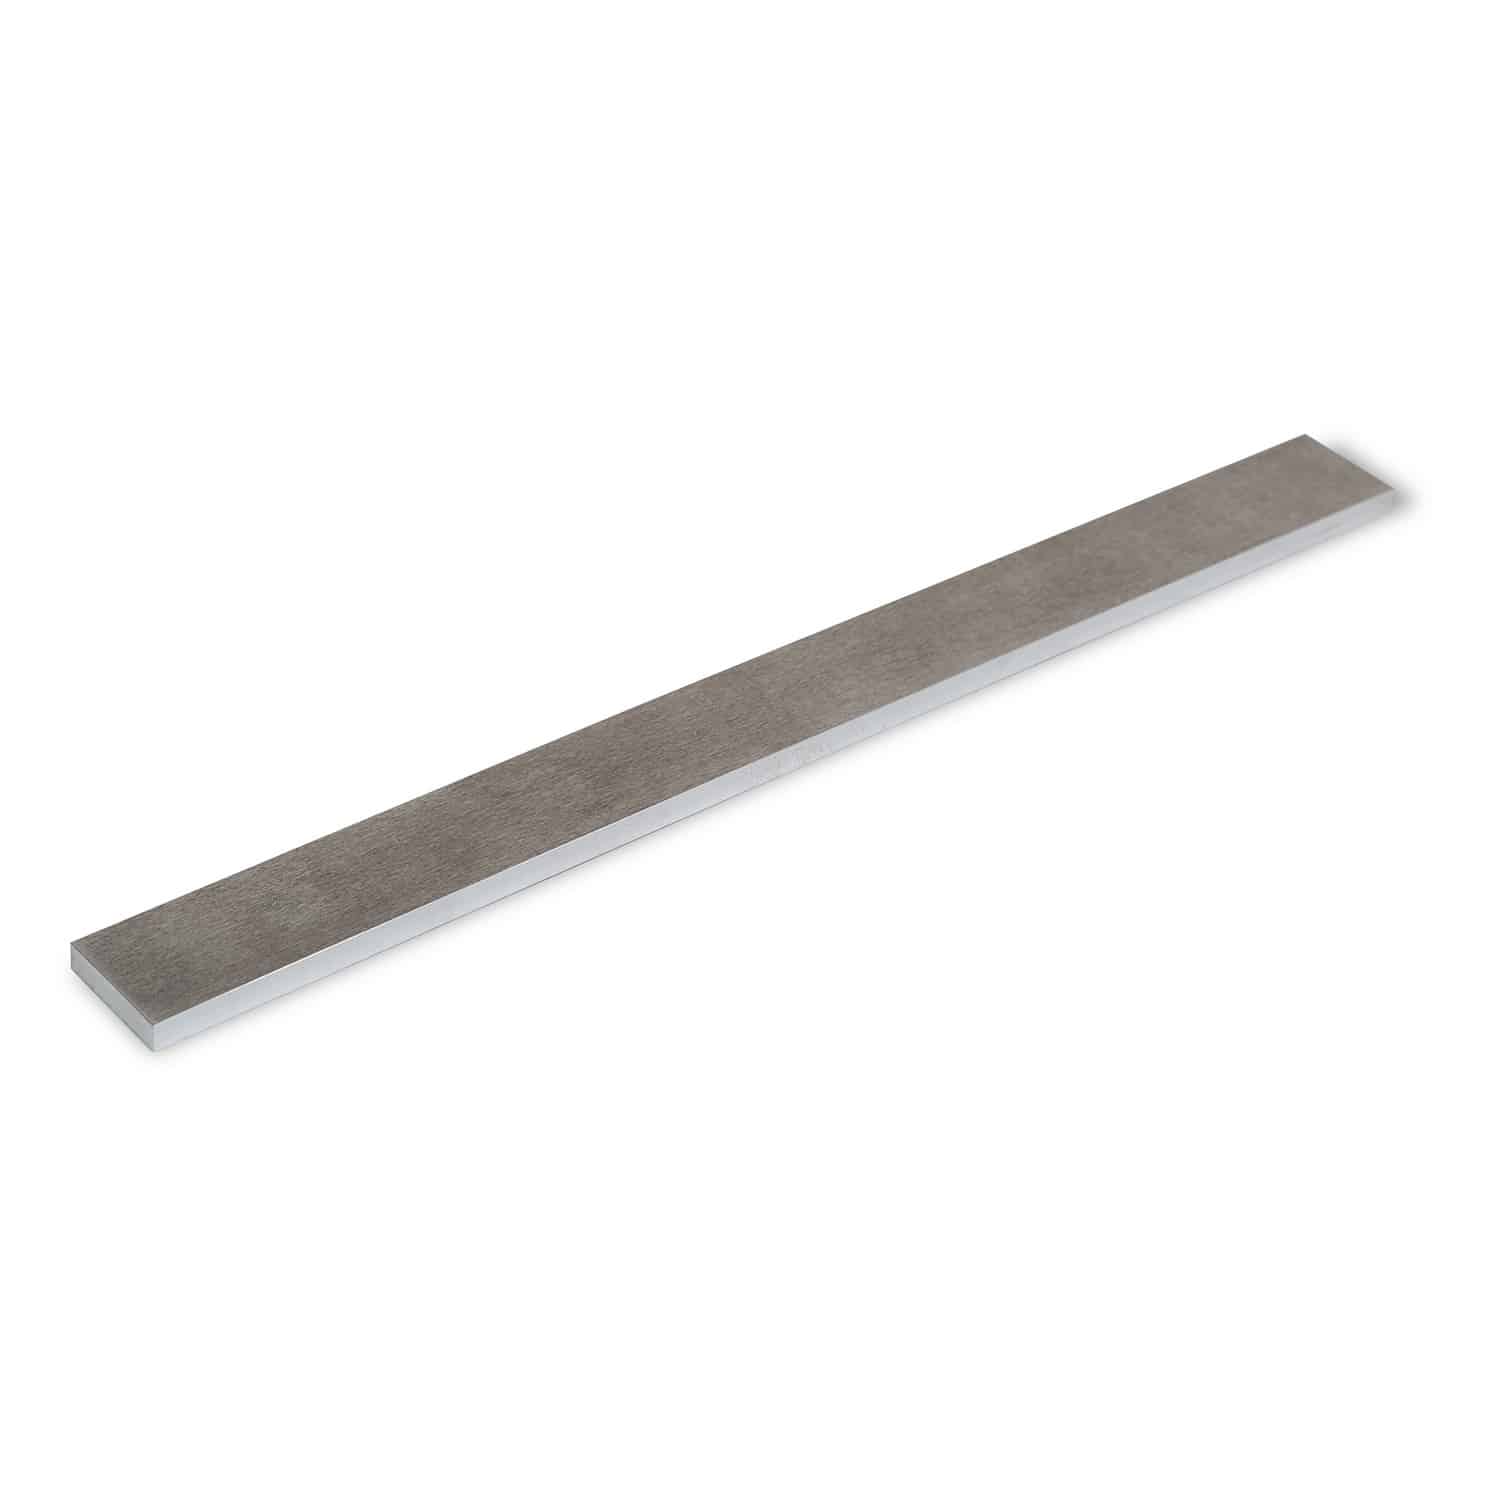 Precision Metal Strip  Flat, Thin, Sheet Metal Strip - Broadest Range of  Alloys